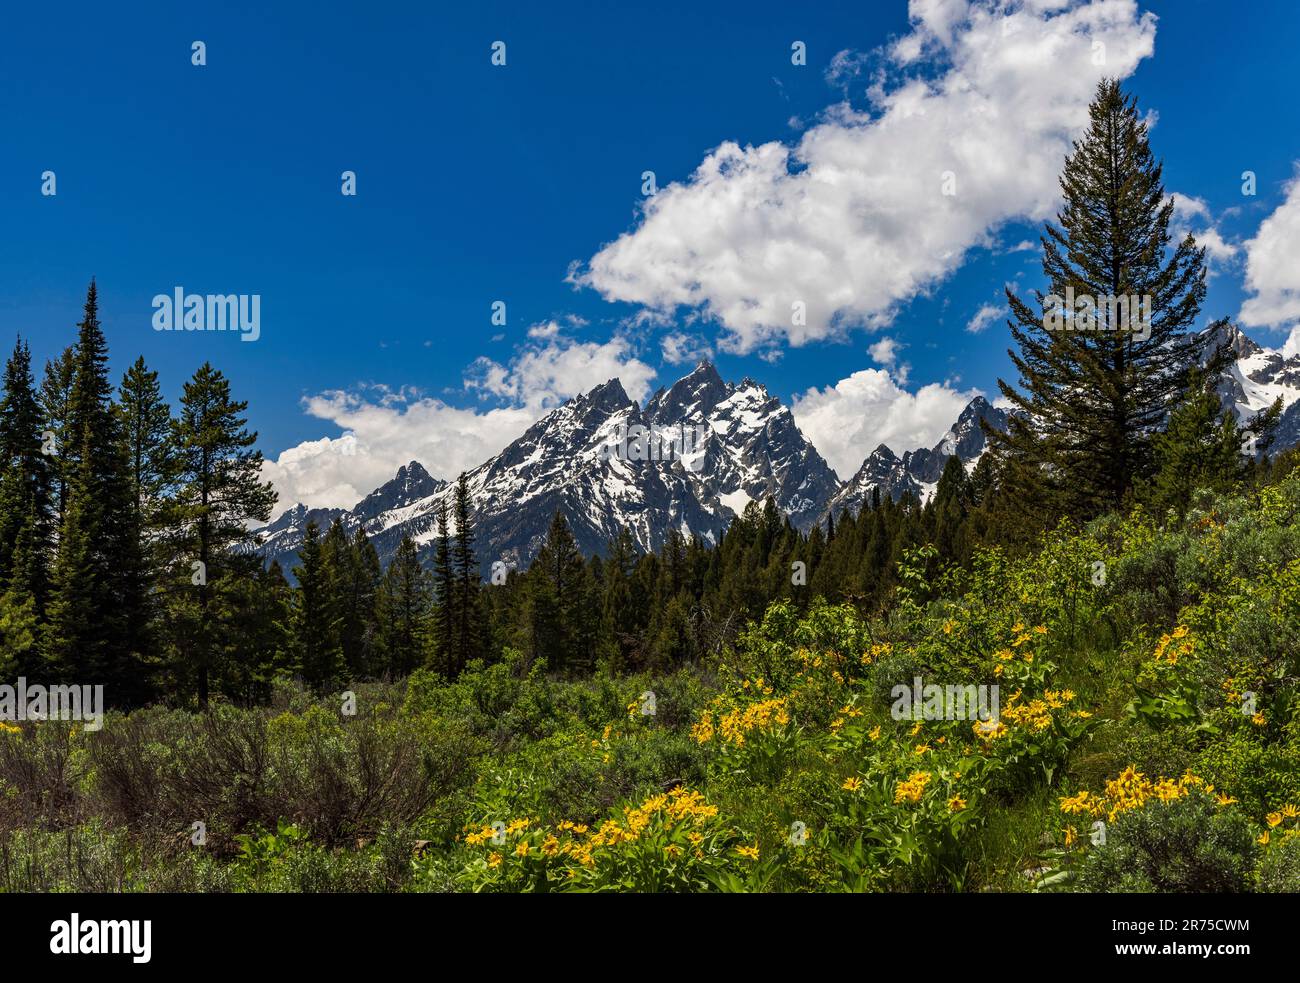 Grand Teton Peak (center) in the Teton Range with Arrowleaf Balsamroot wildflowers (Balsamorhiza sagittataw), Grand Teton National Park, WY, USA.. Stock Photo